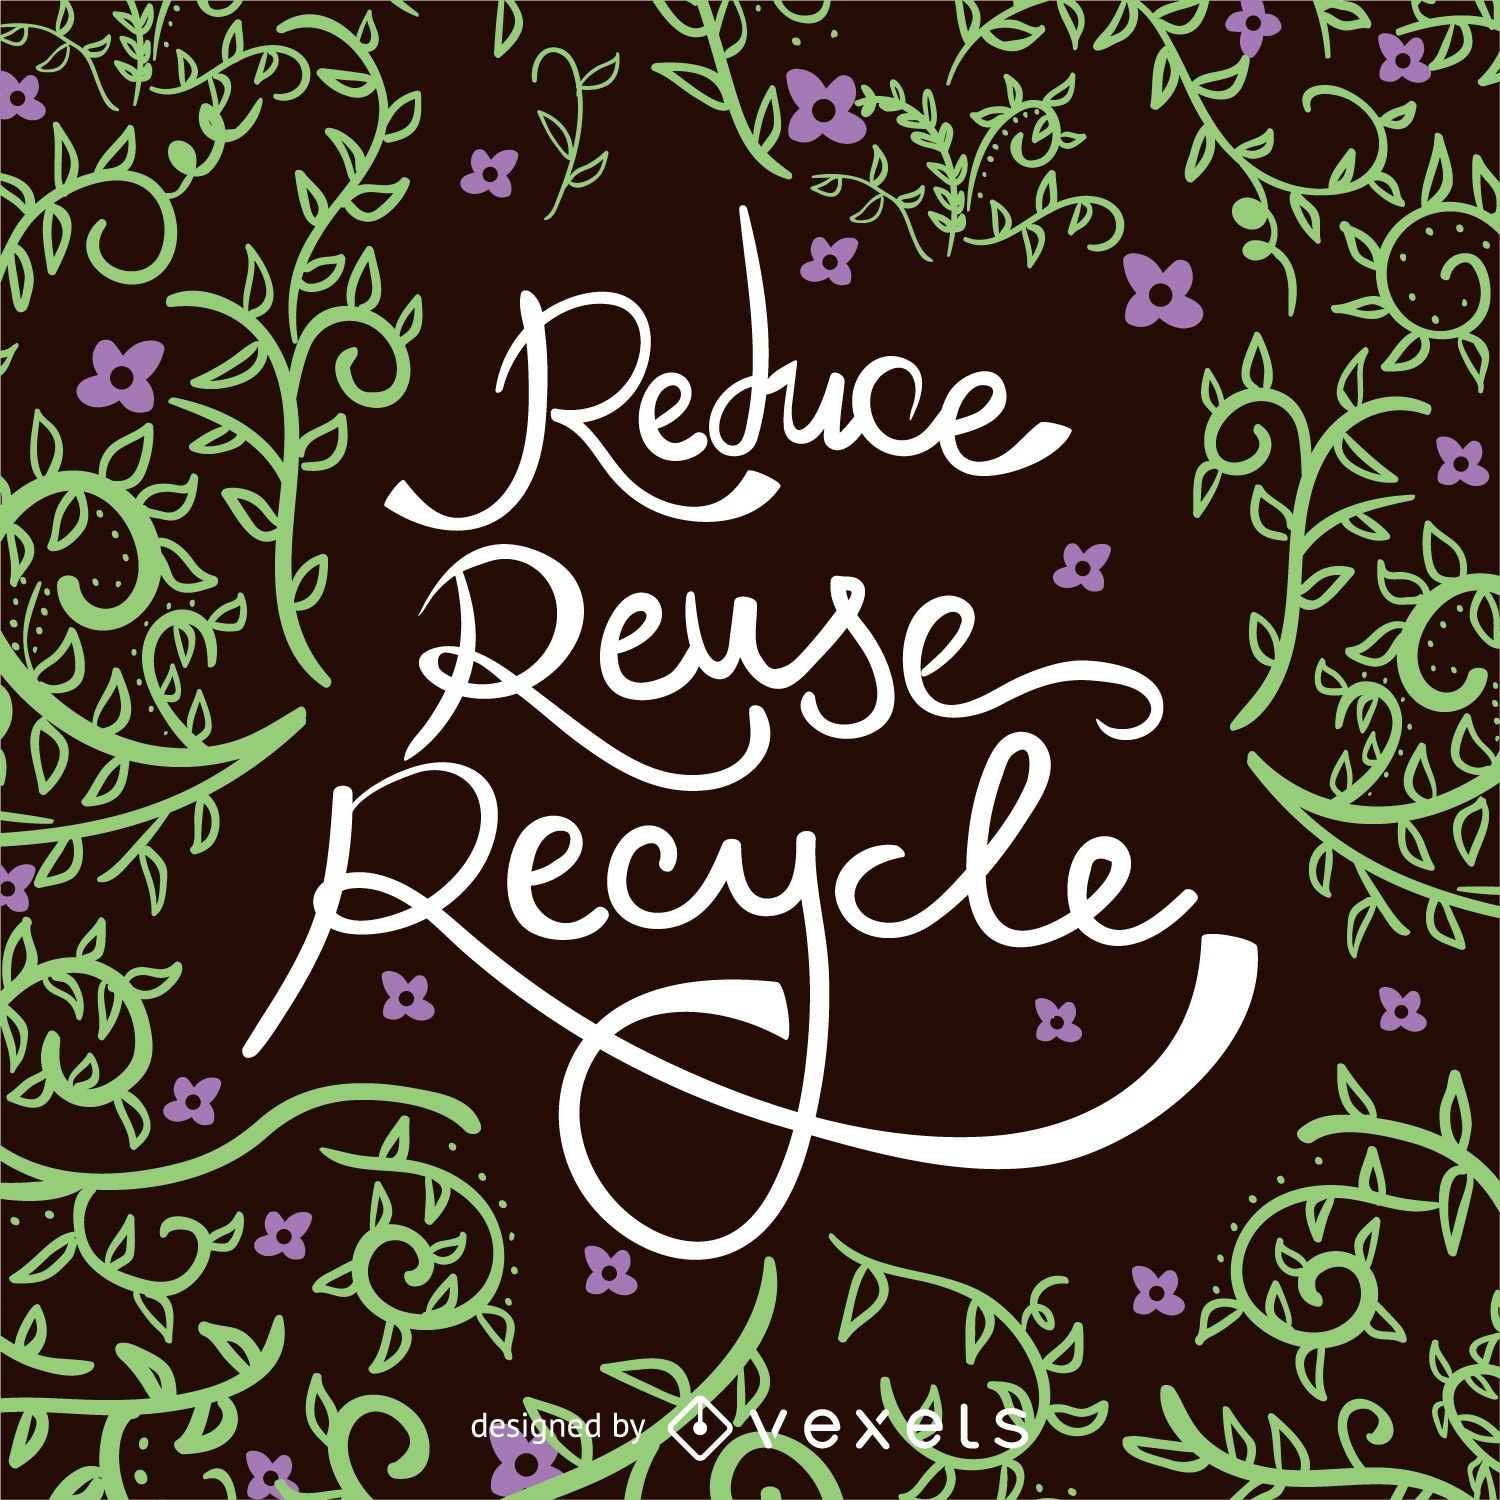 Reduzir Reutilizar Reciclar Dia da Terra